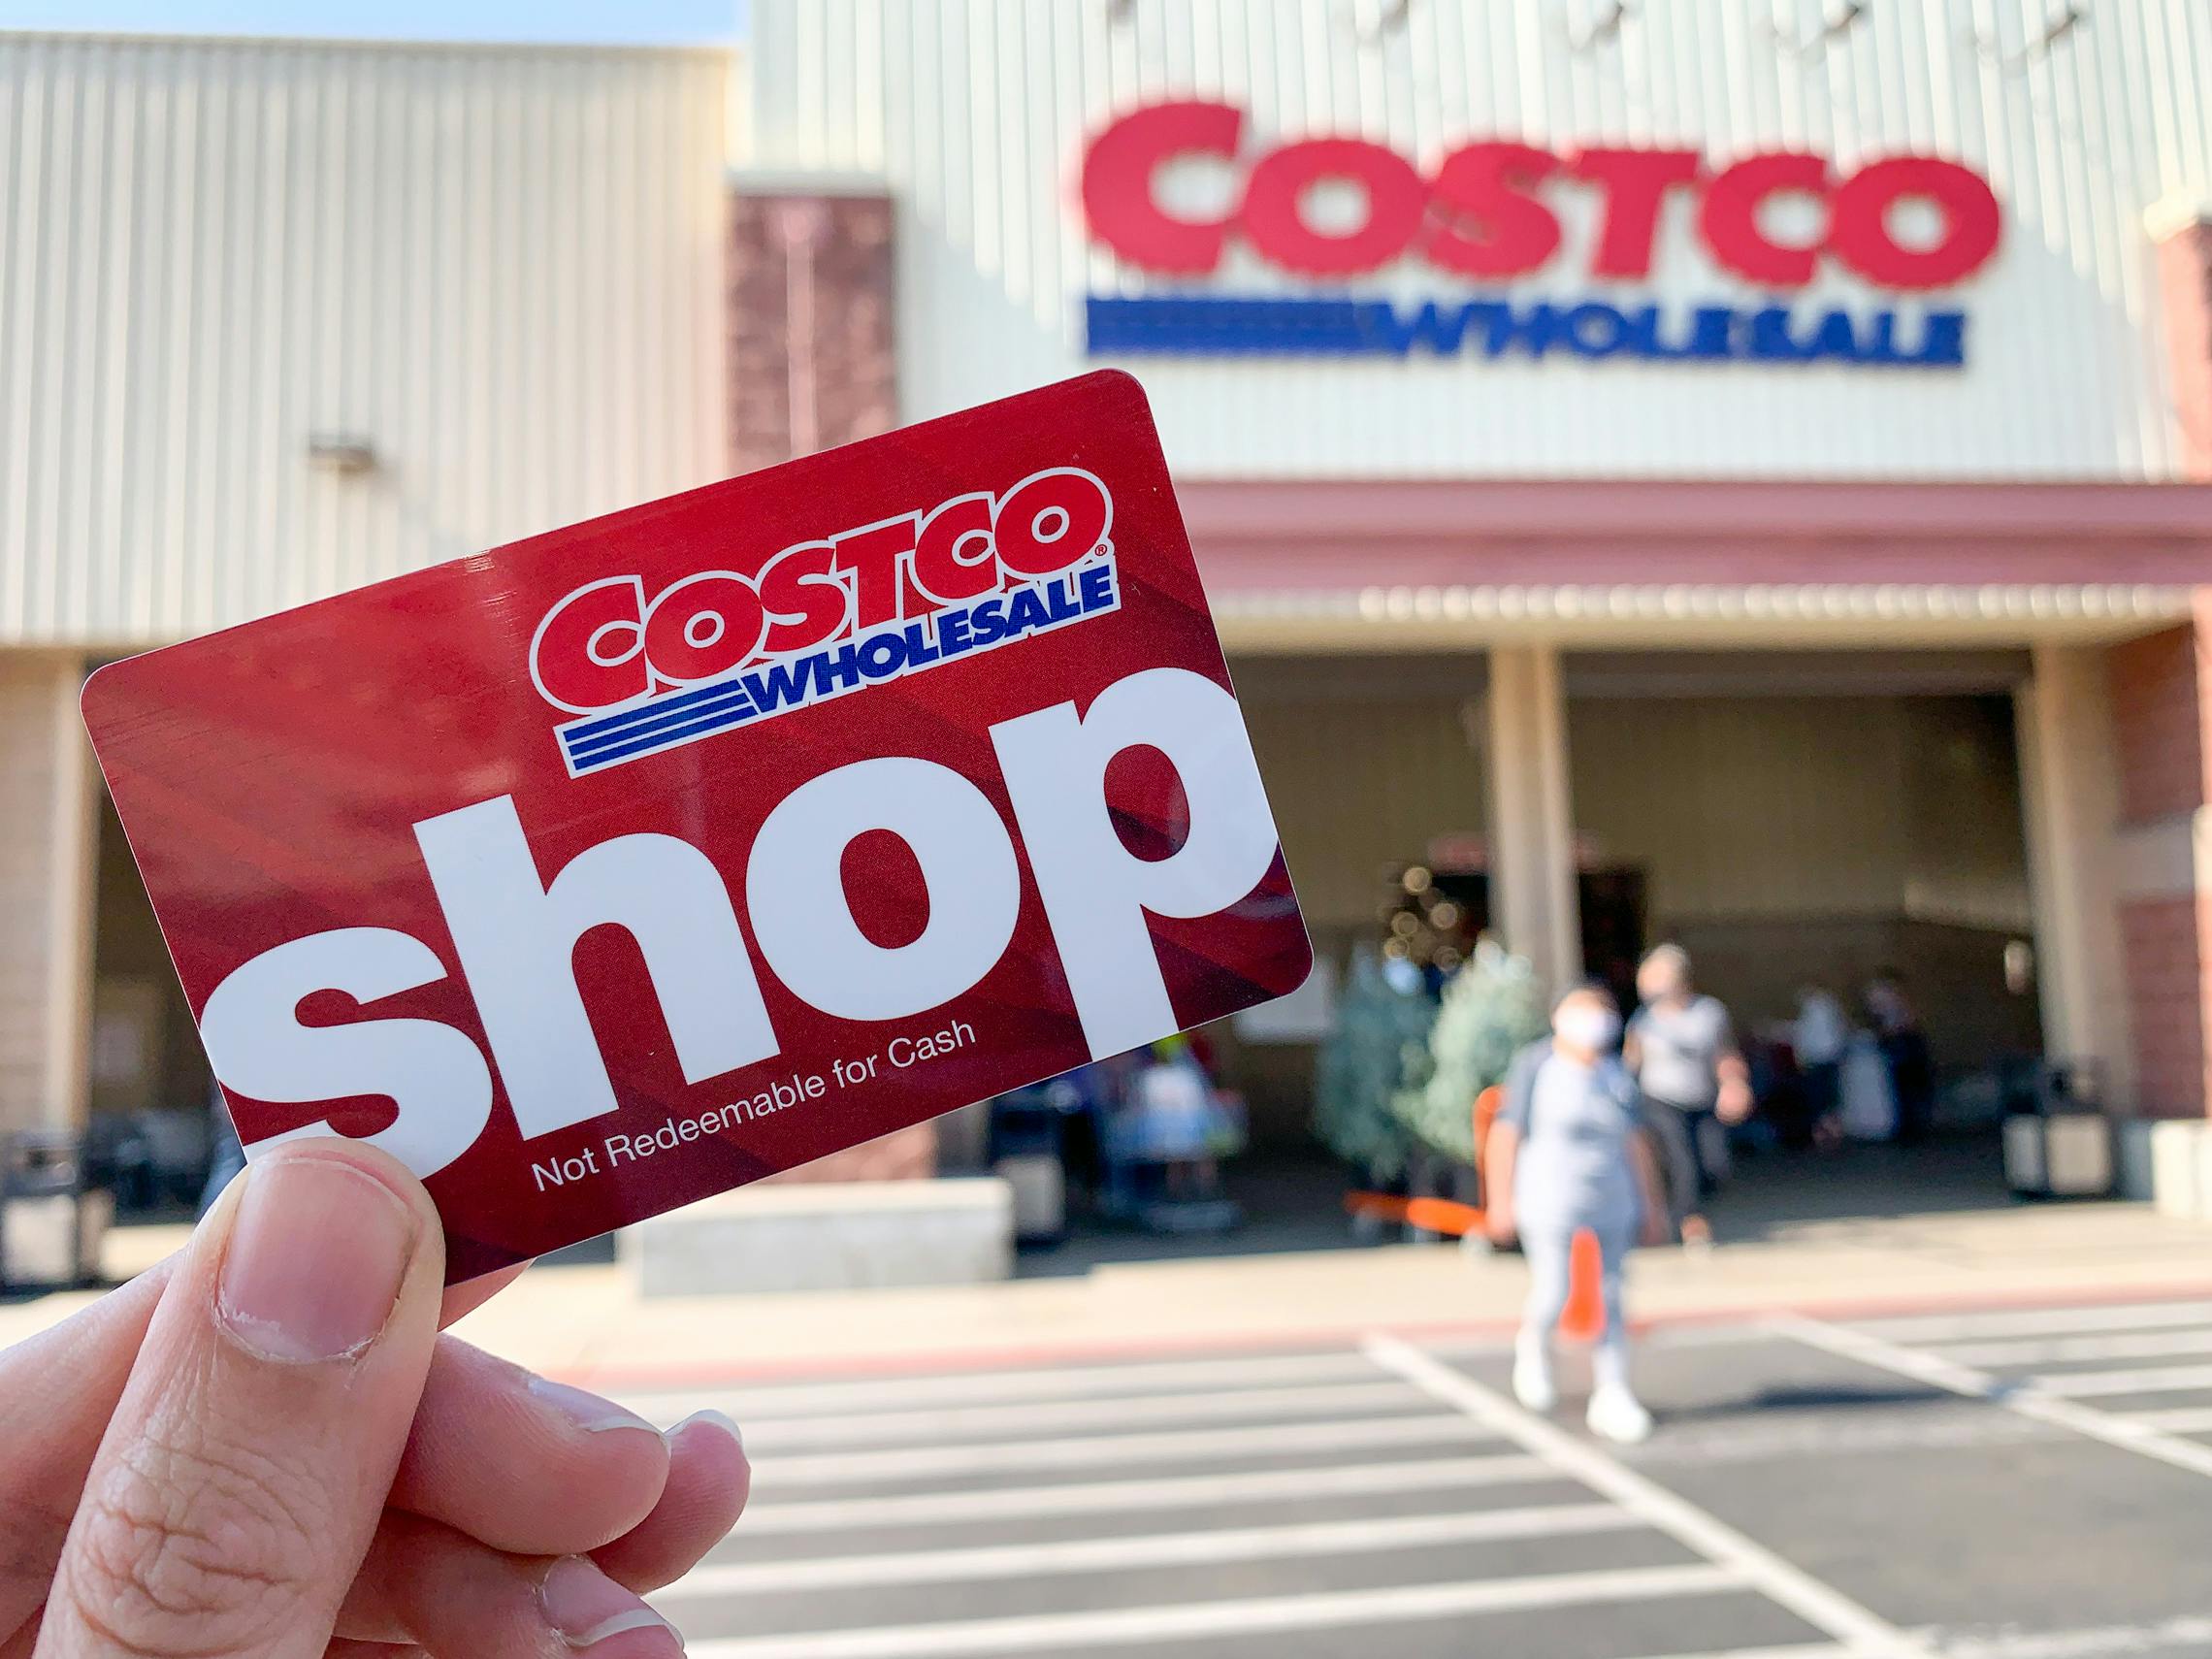 Costco Shop card held in front of Costco.